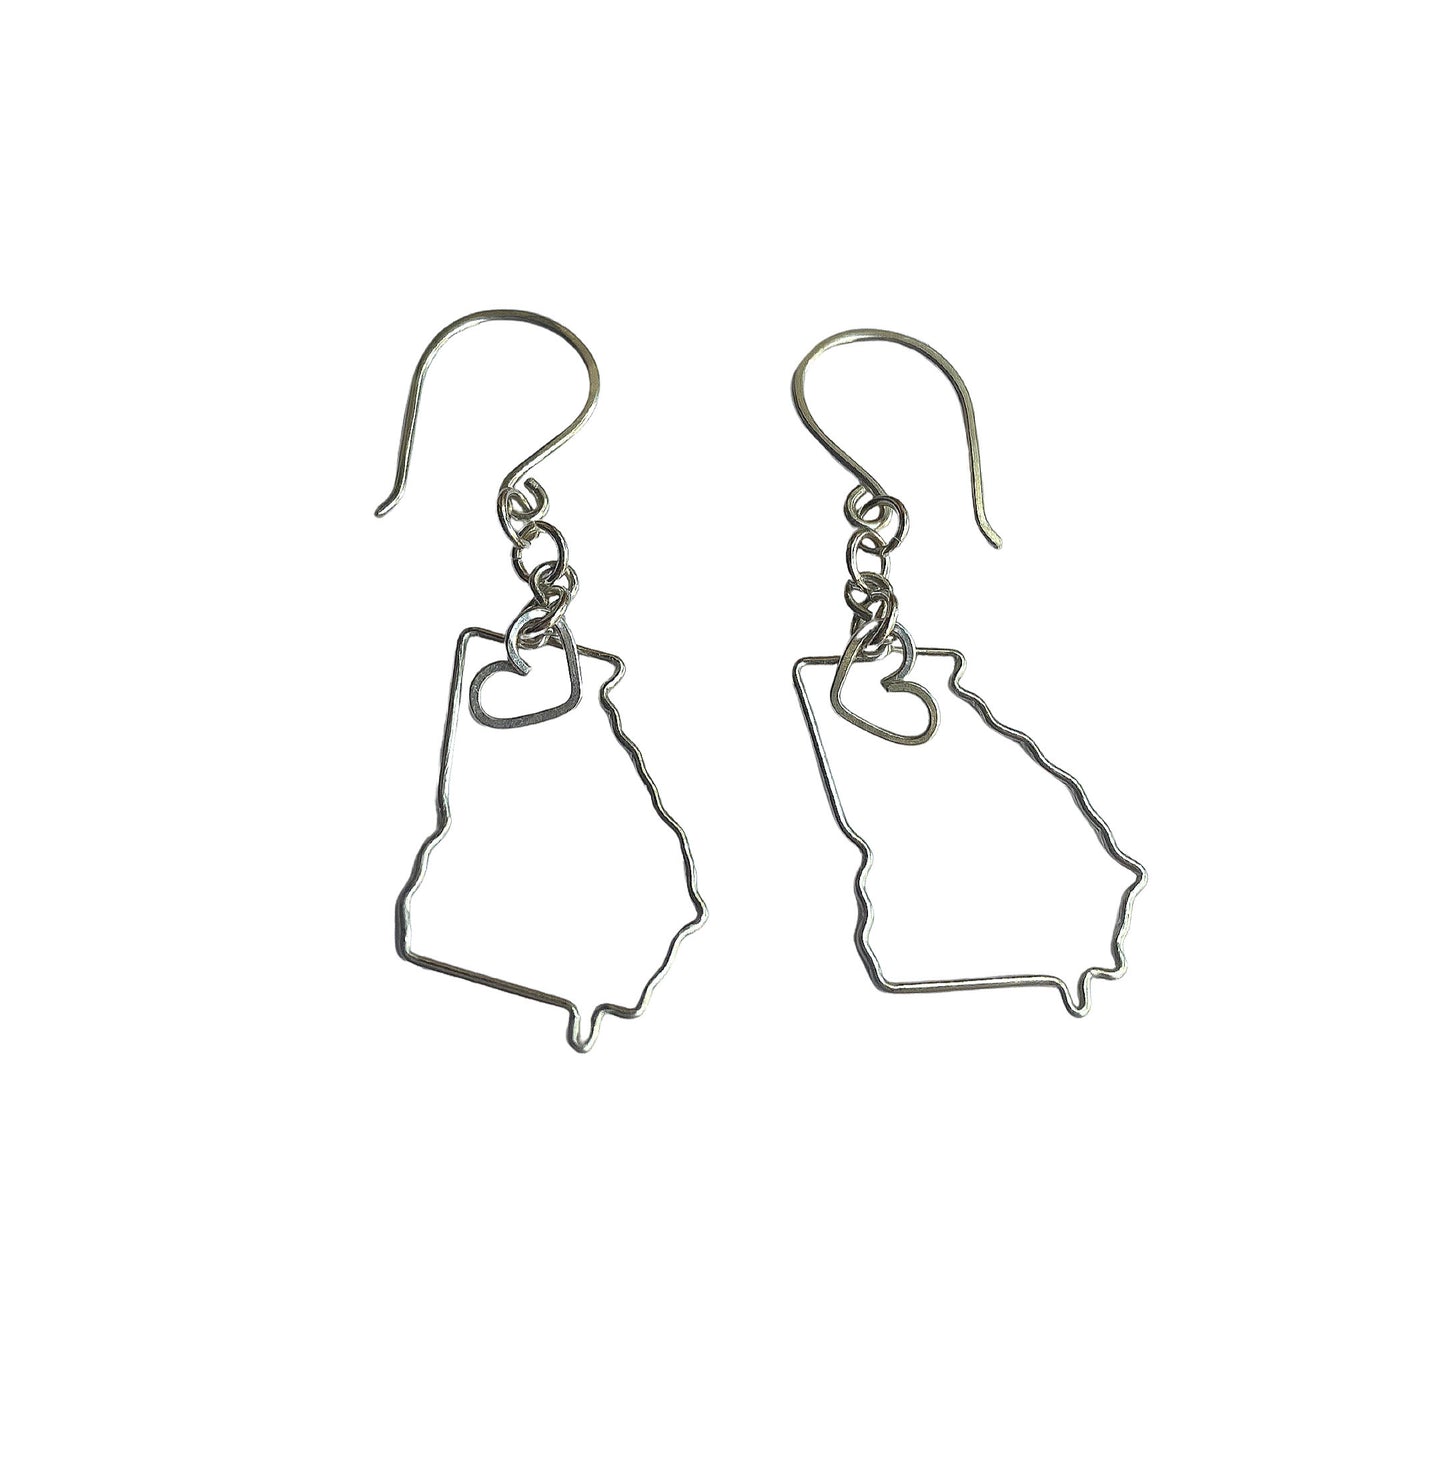 state of Georgia outline earrings